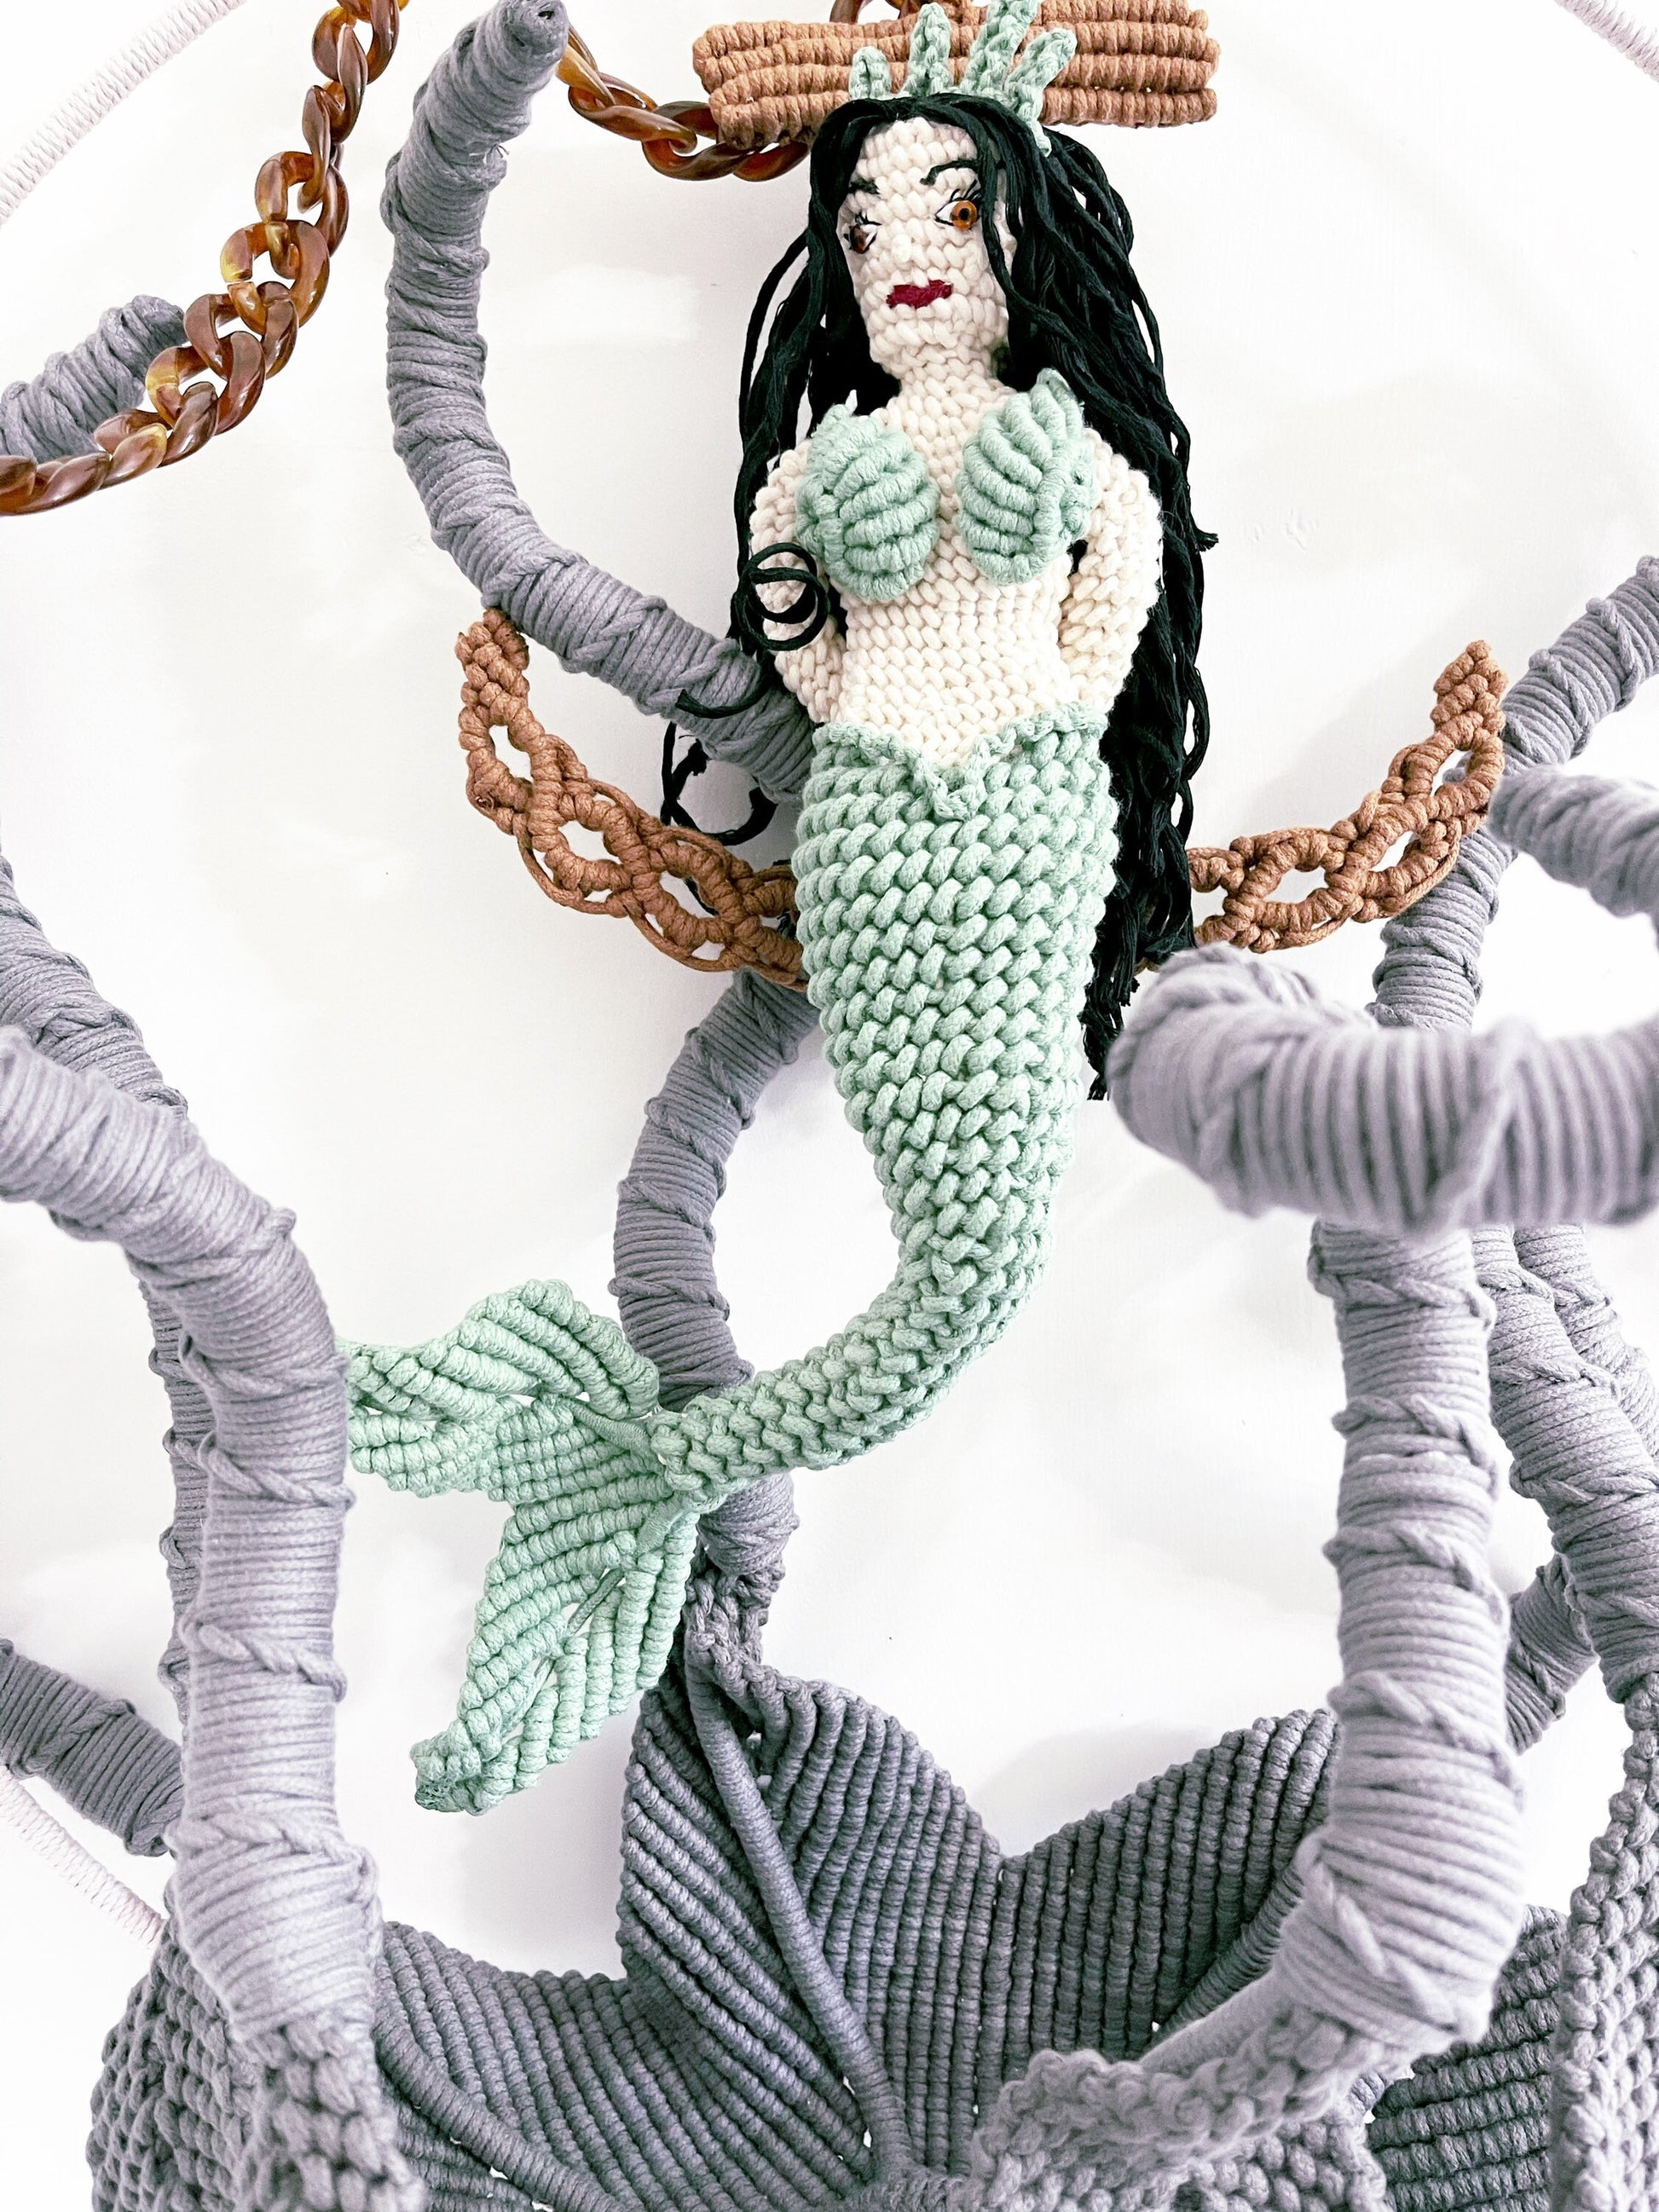 COMMISSION ONLY ART// Custom order/Mermaid with Kraken/Mermaid Art/Macrame Sculpture/ Kraken/Mermaid/Macrame Sculpture